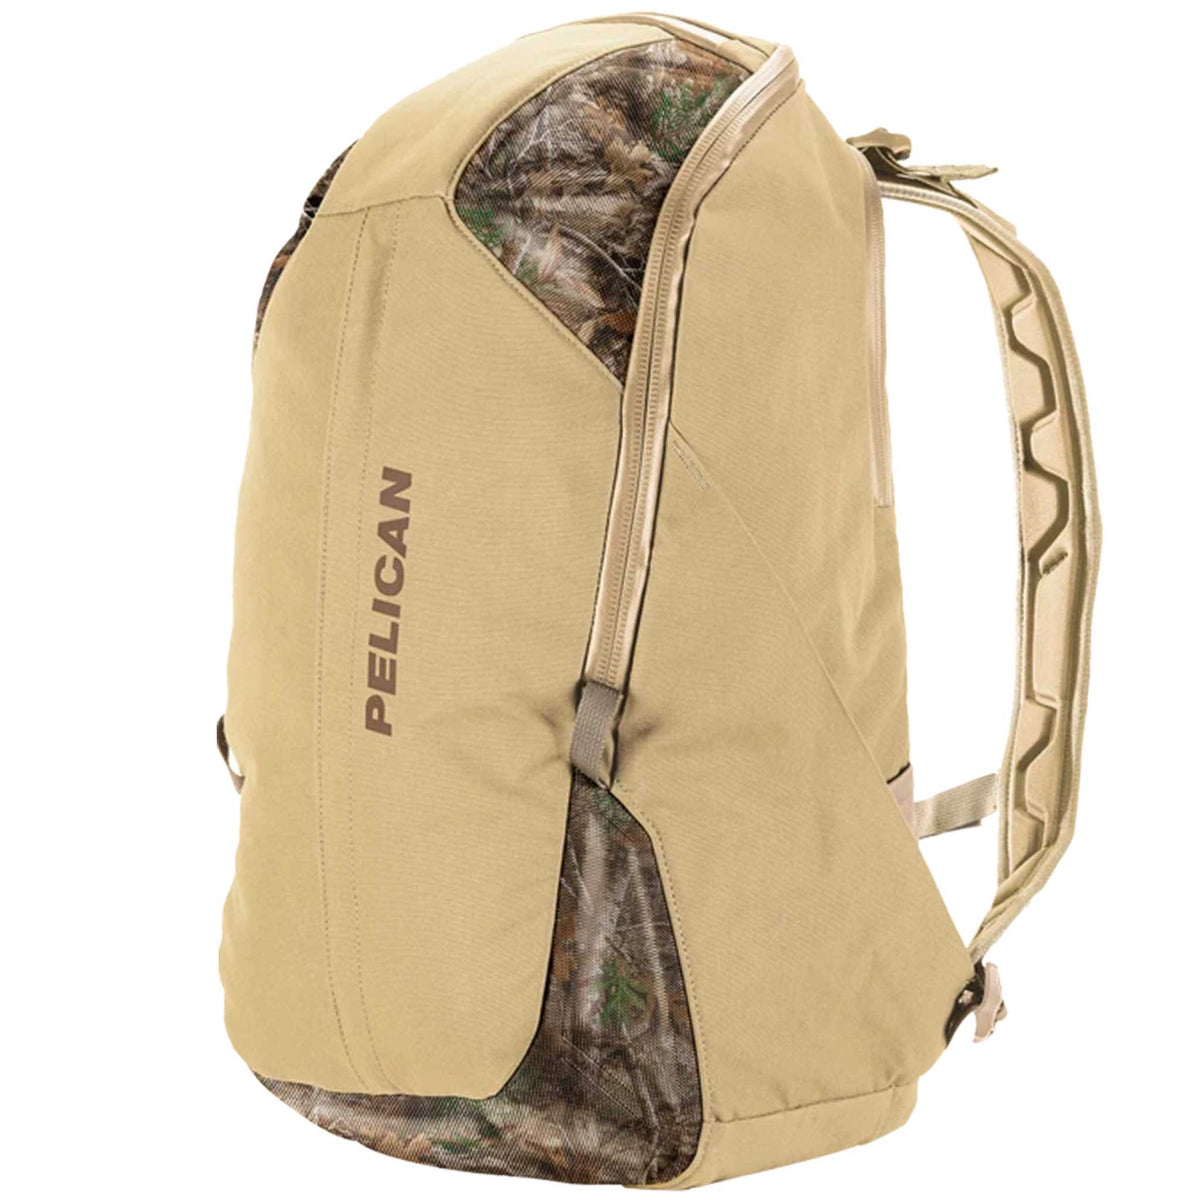 Pelican™ MPB35 Backpack in realtree